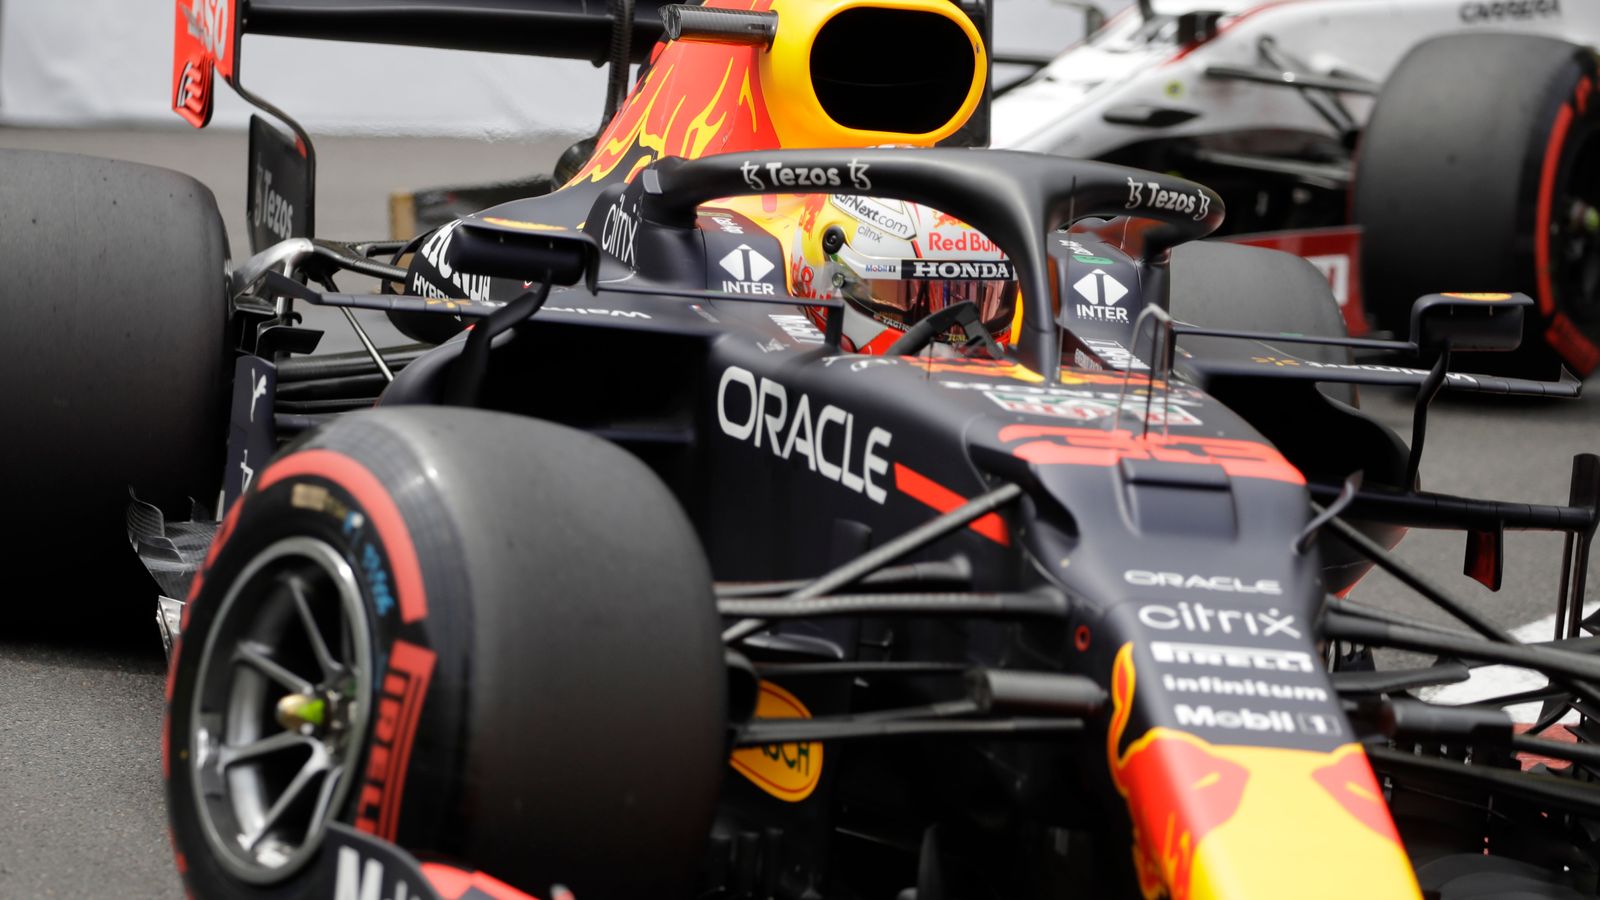 Monaco GP: Max Verstappen just ahead of Ferrari in Practice Three with ...